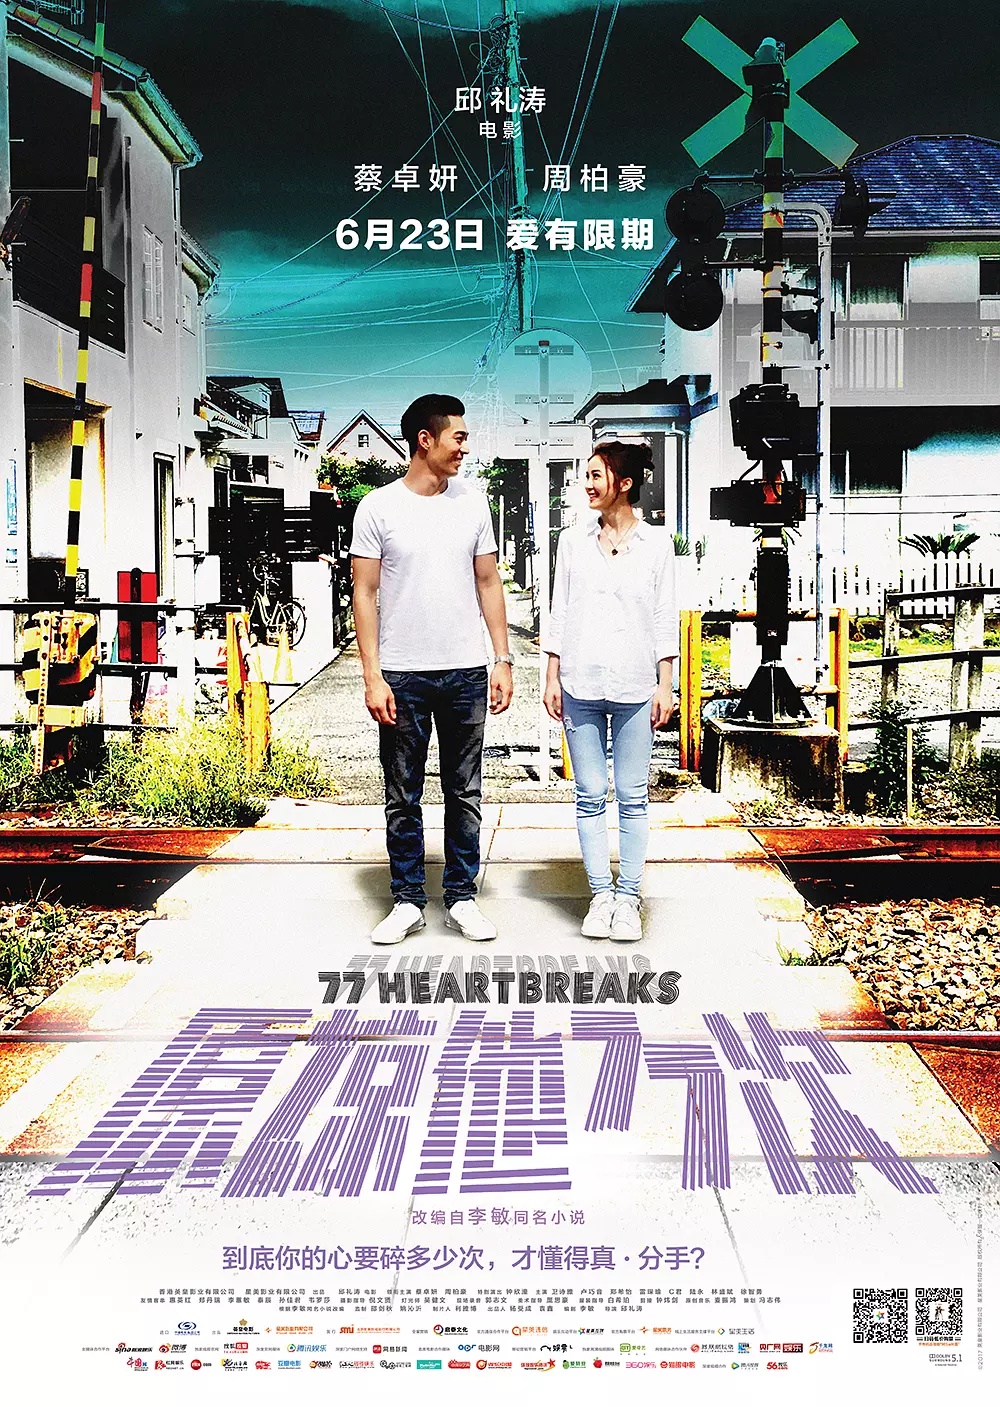 Nonton film 77 Heartbreaks layarkaca21 indoxx1 ganool online streaming terbaru